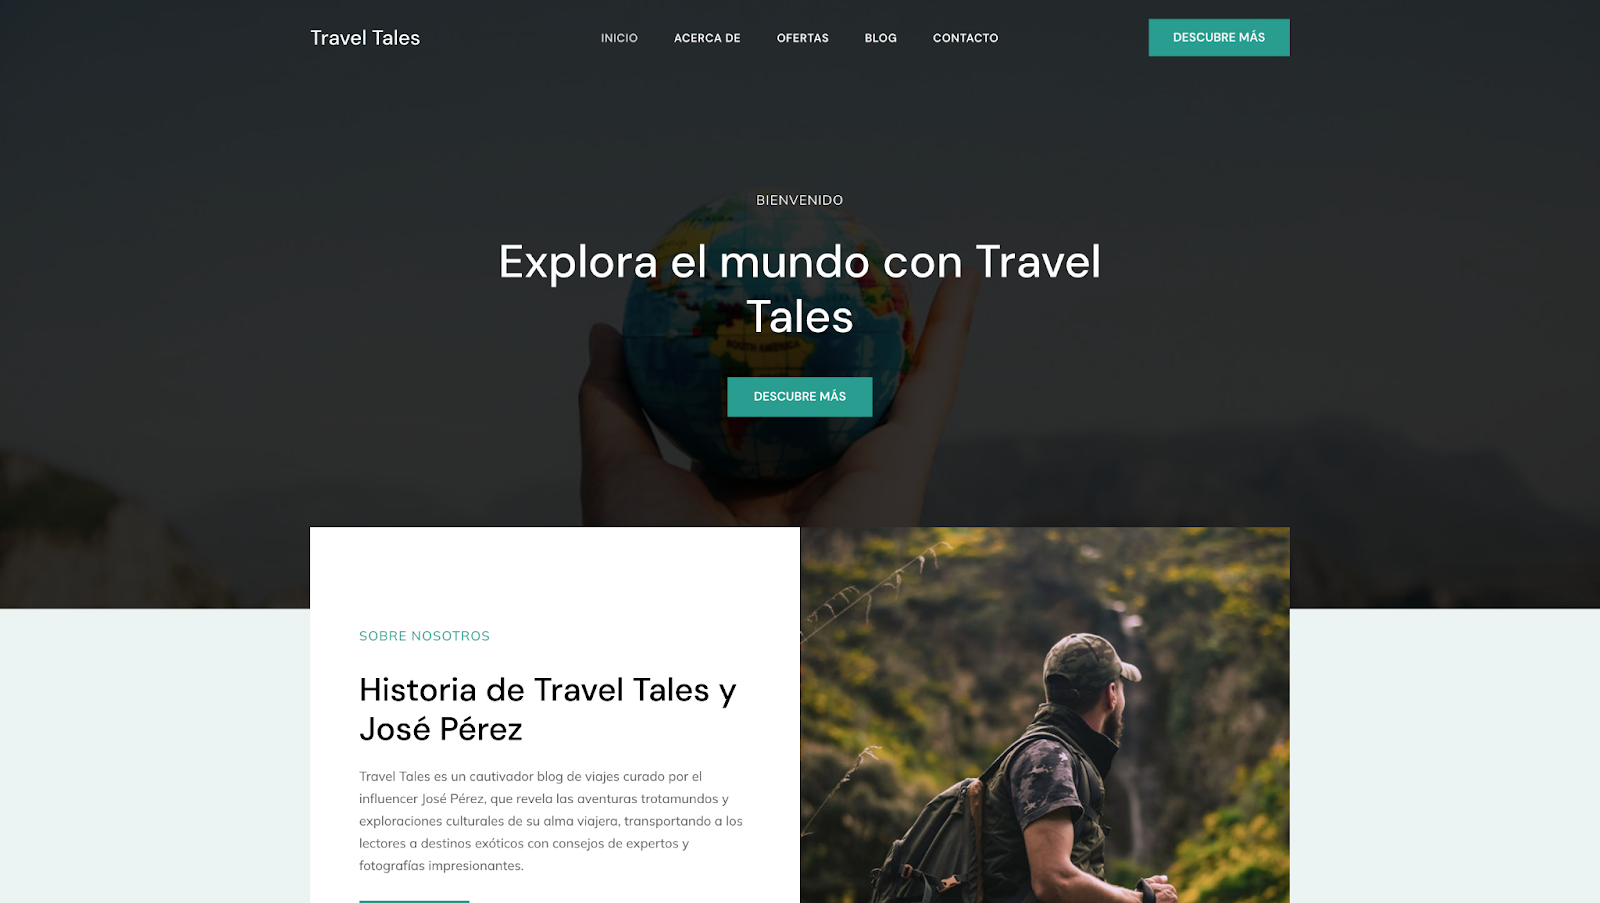 Website generated in Spanish